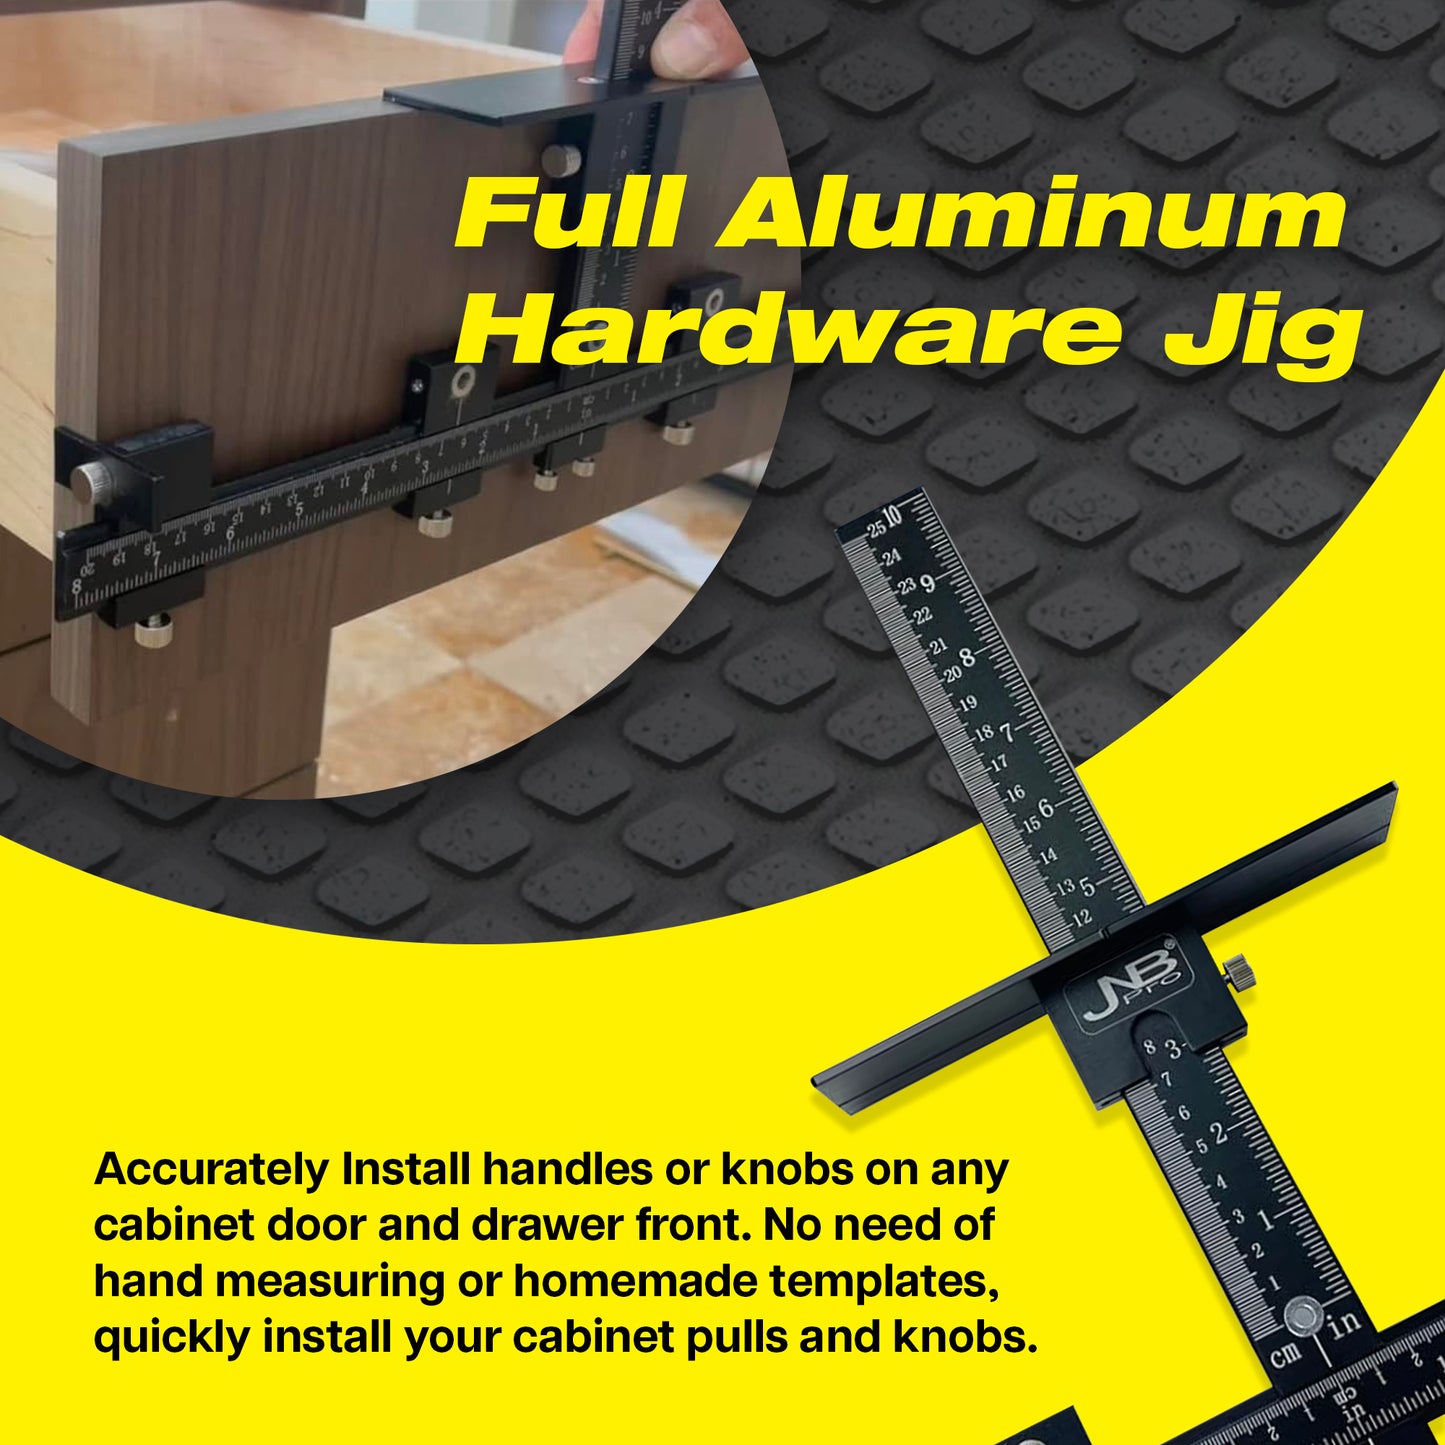 Hardware Jig Full Aluminum